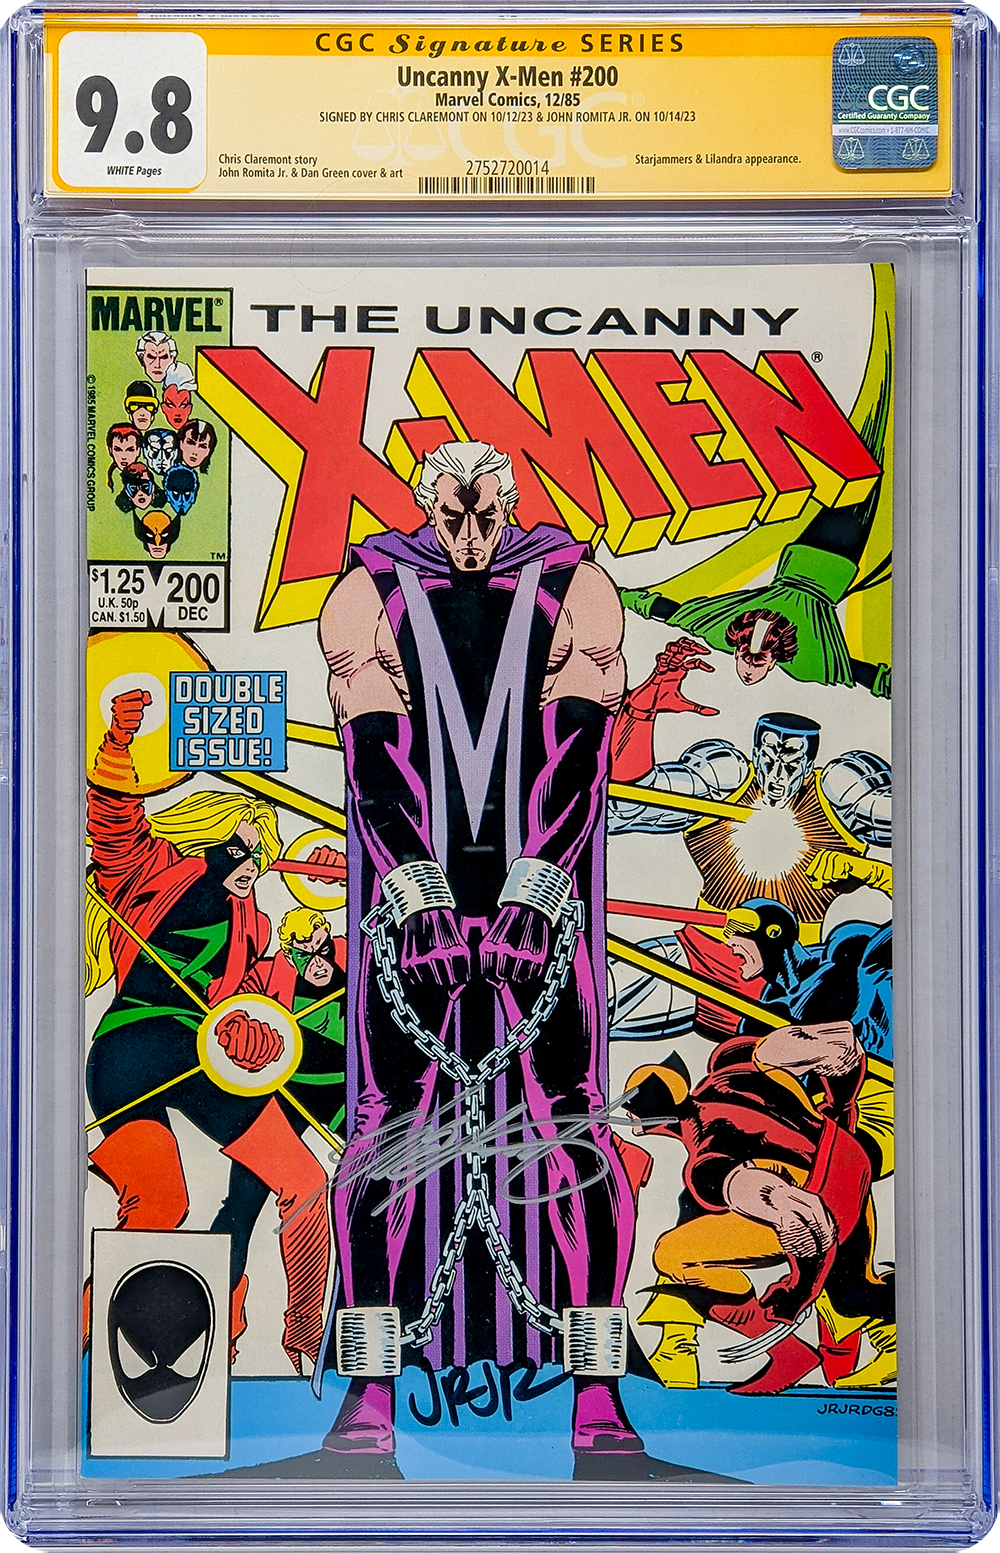 Uncanny X-Men #200 Marvel Comics CGC Signature Series 9.8 x2 Signed John Romita Jr, Chris Claremont GalaxyCon